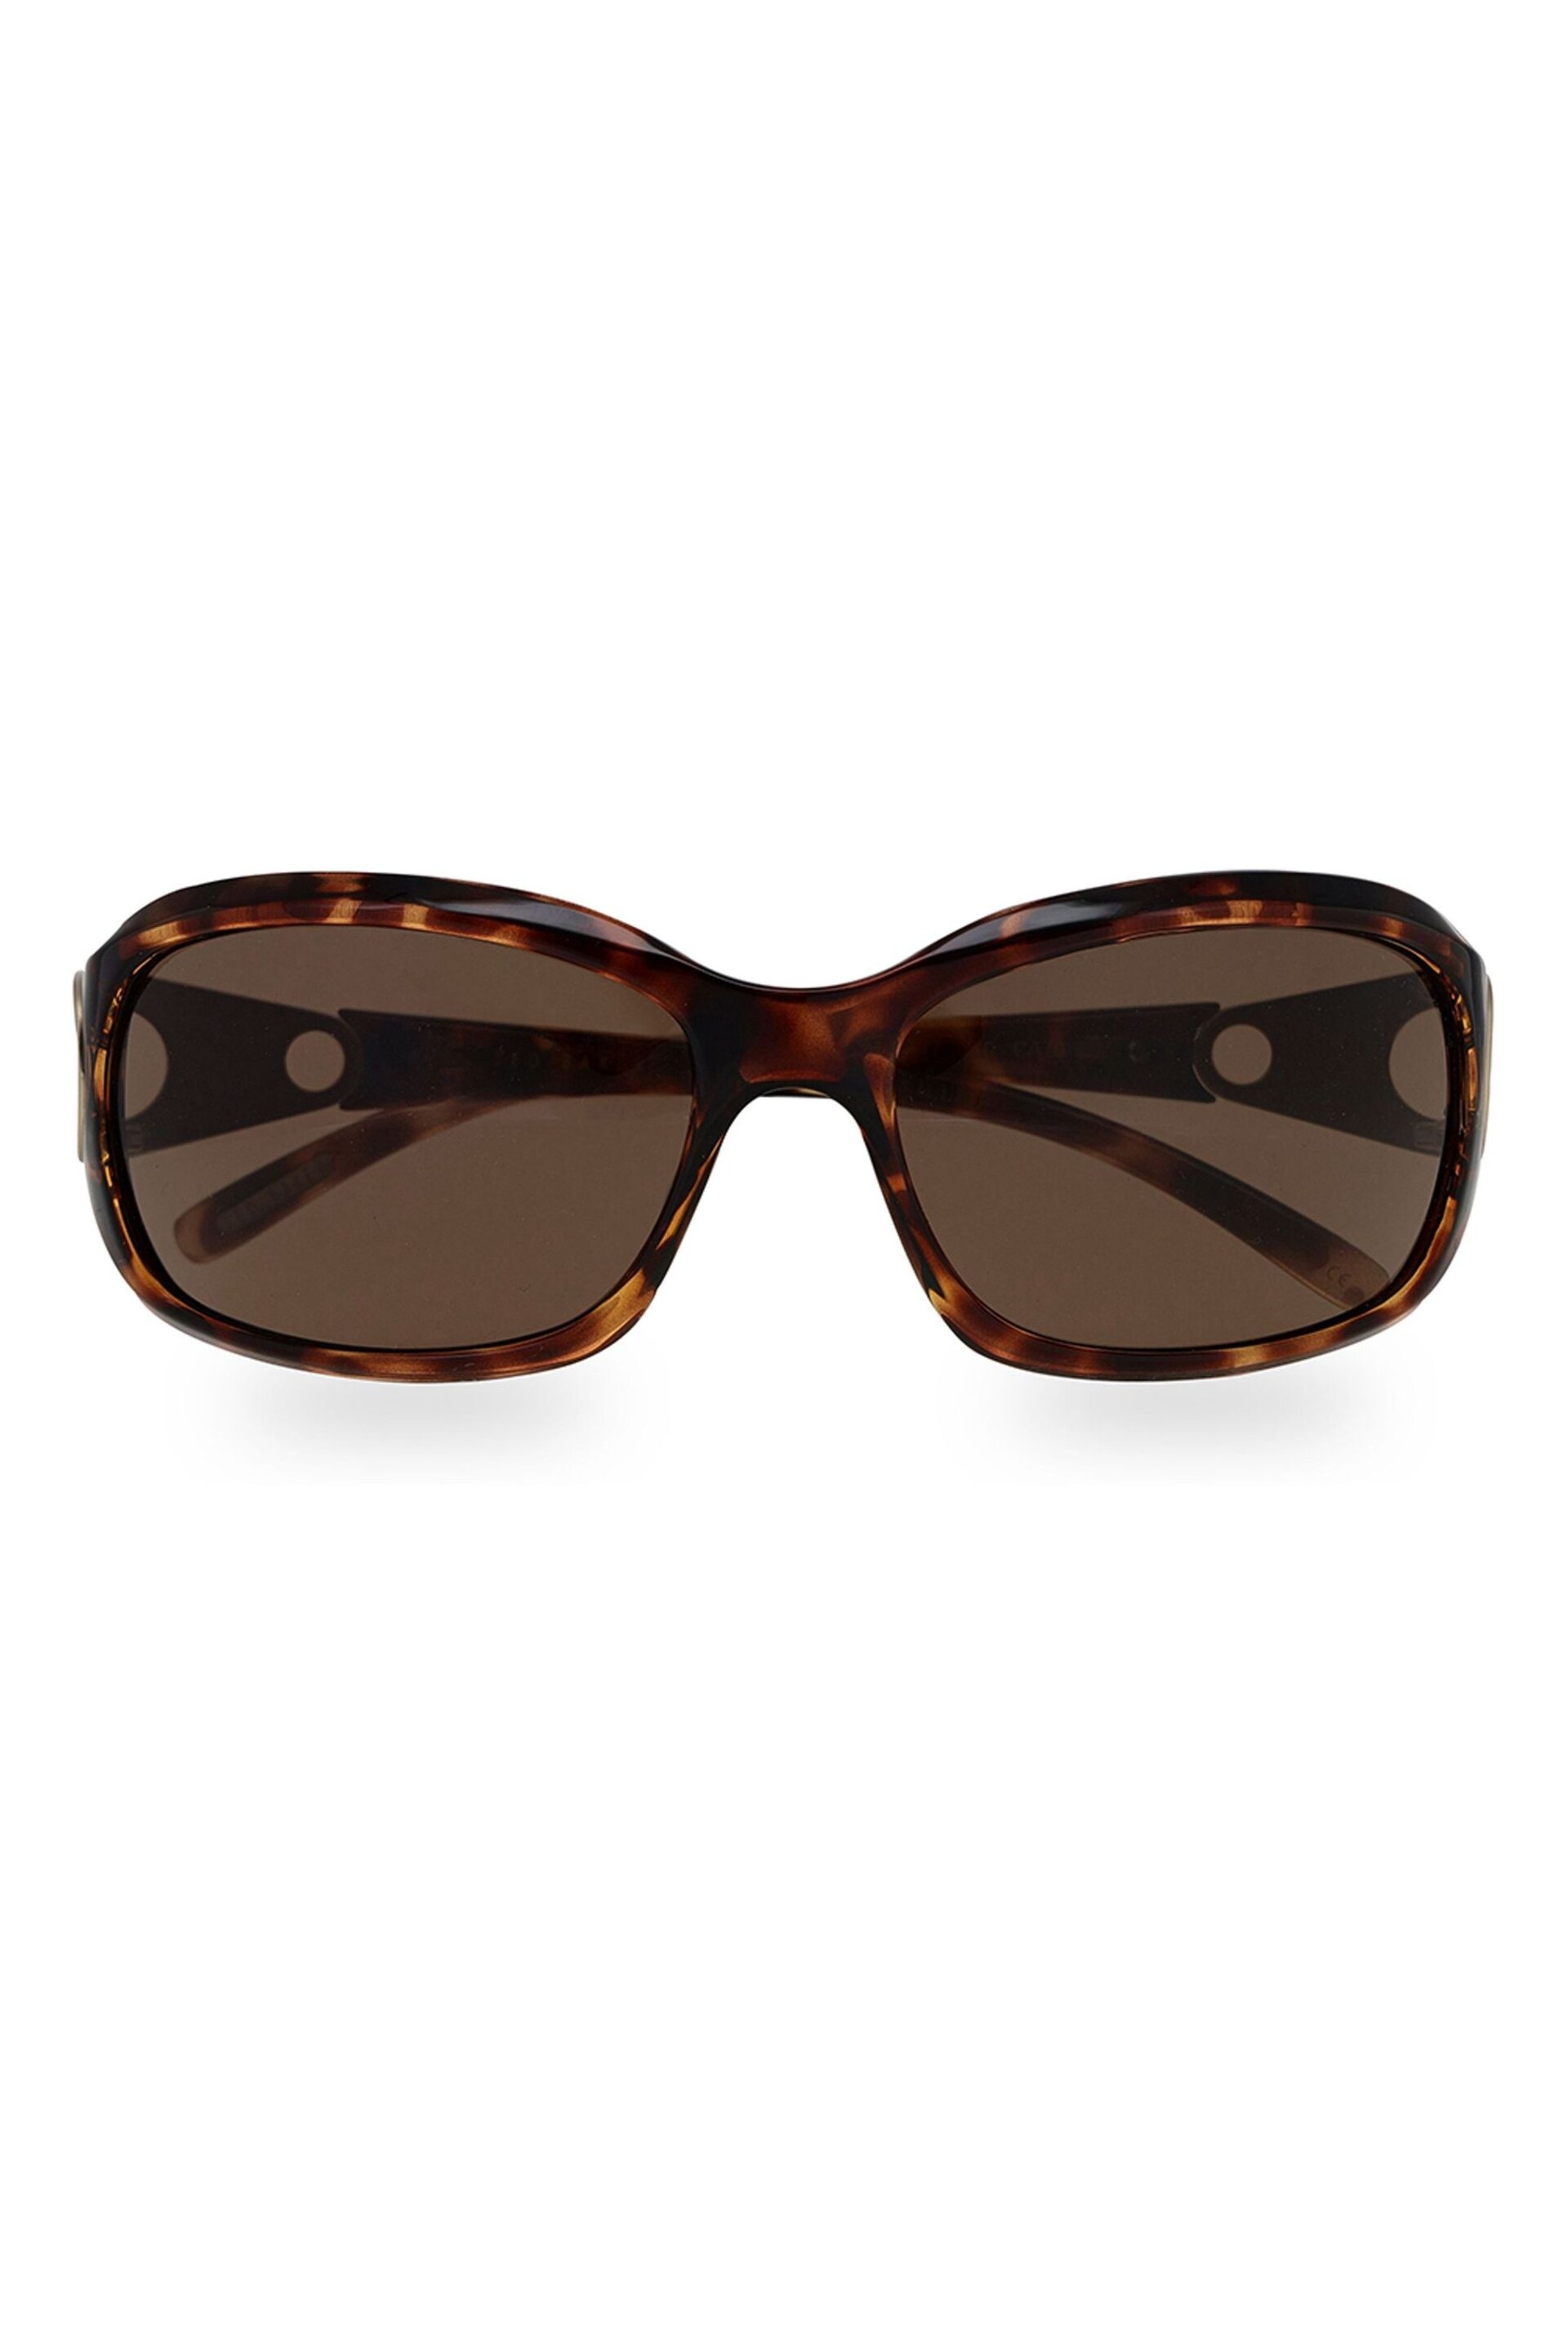 Ted Baker Tortoiseshell Brown Fashion Sunglasses - Image 1 of 5